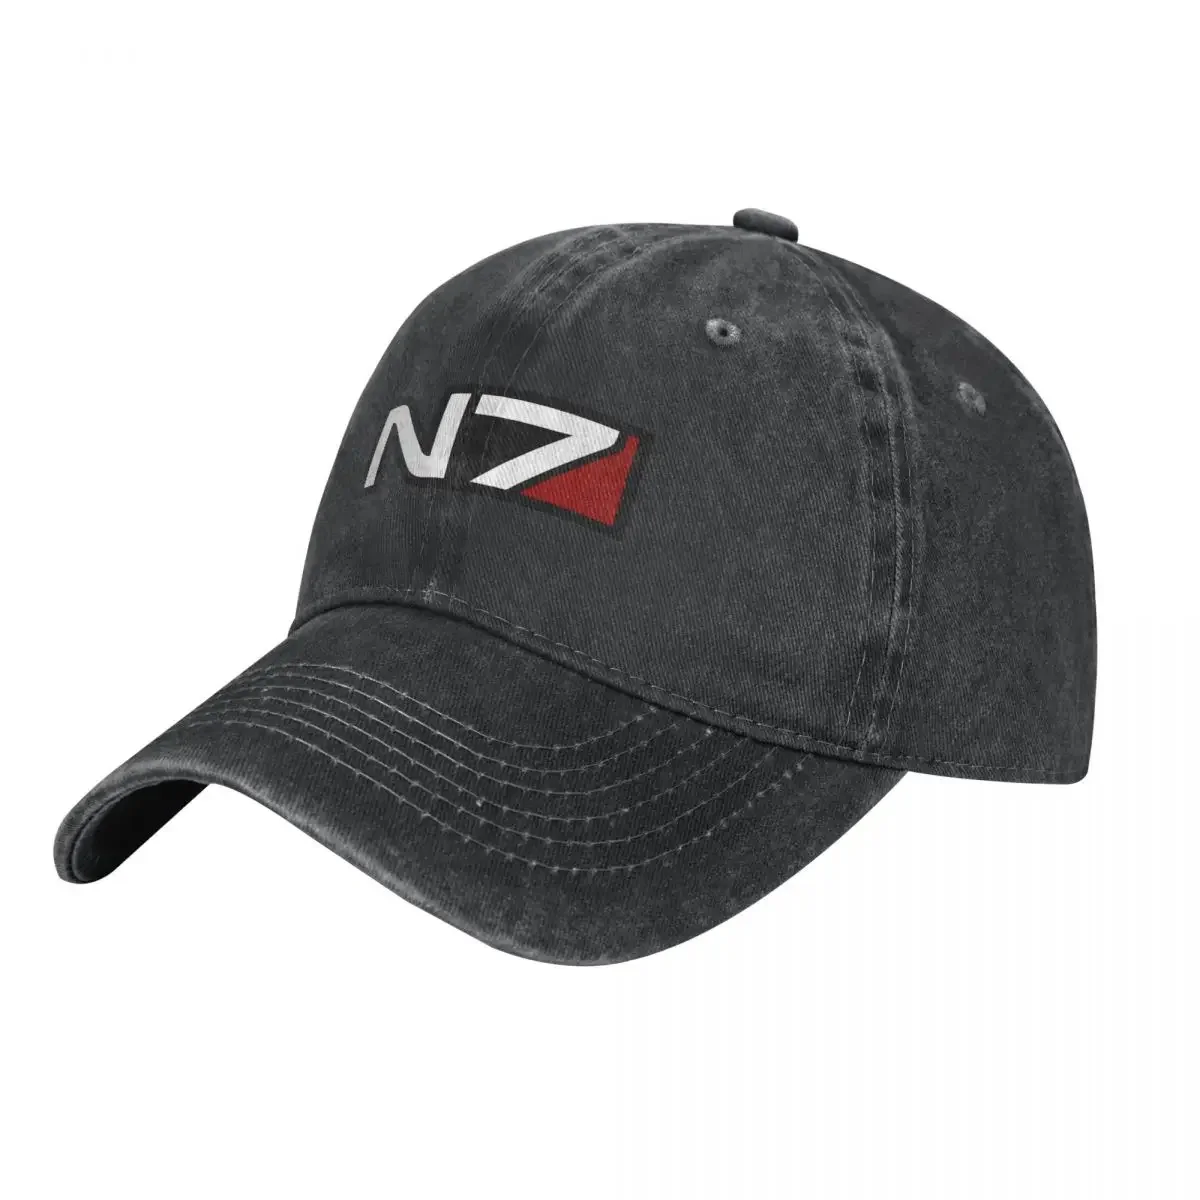 

N7 emblem, Mass Effect Cowboy Hat Anime Hat New In Hat Men Caps Women's